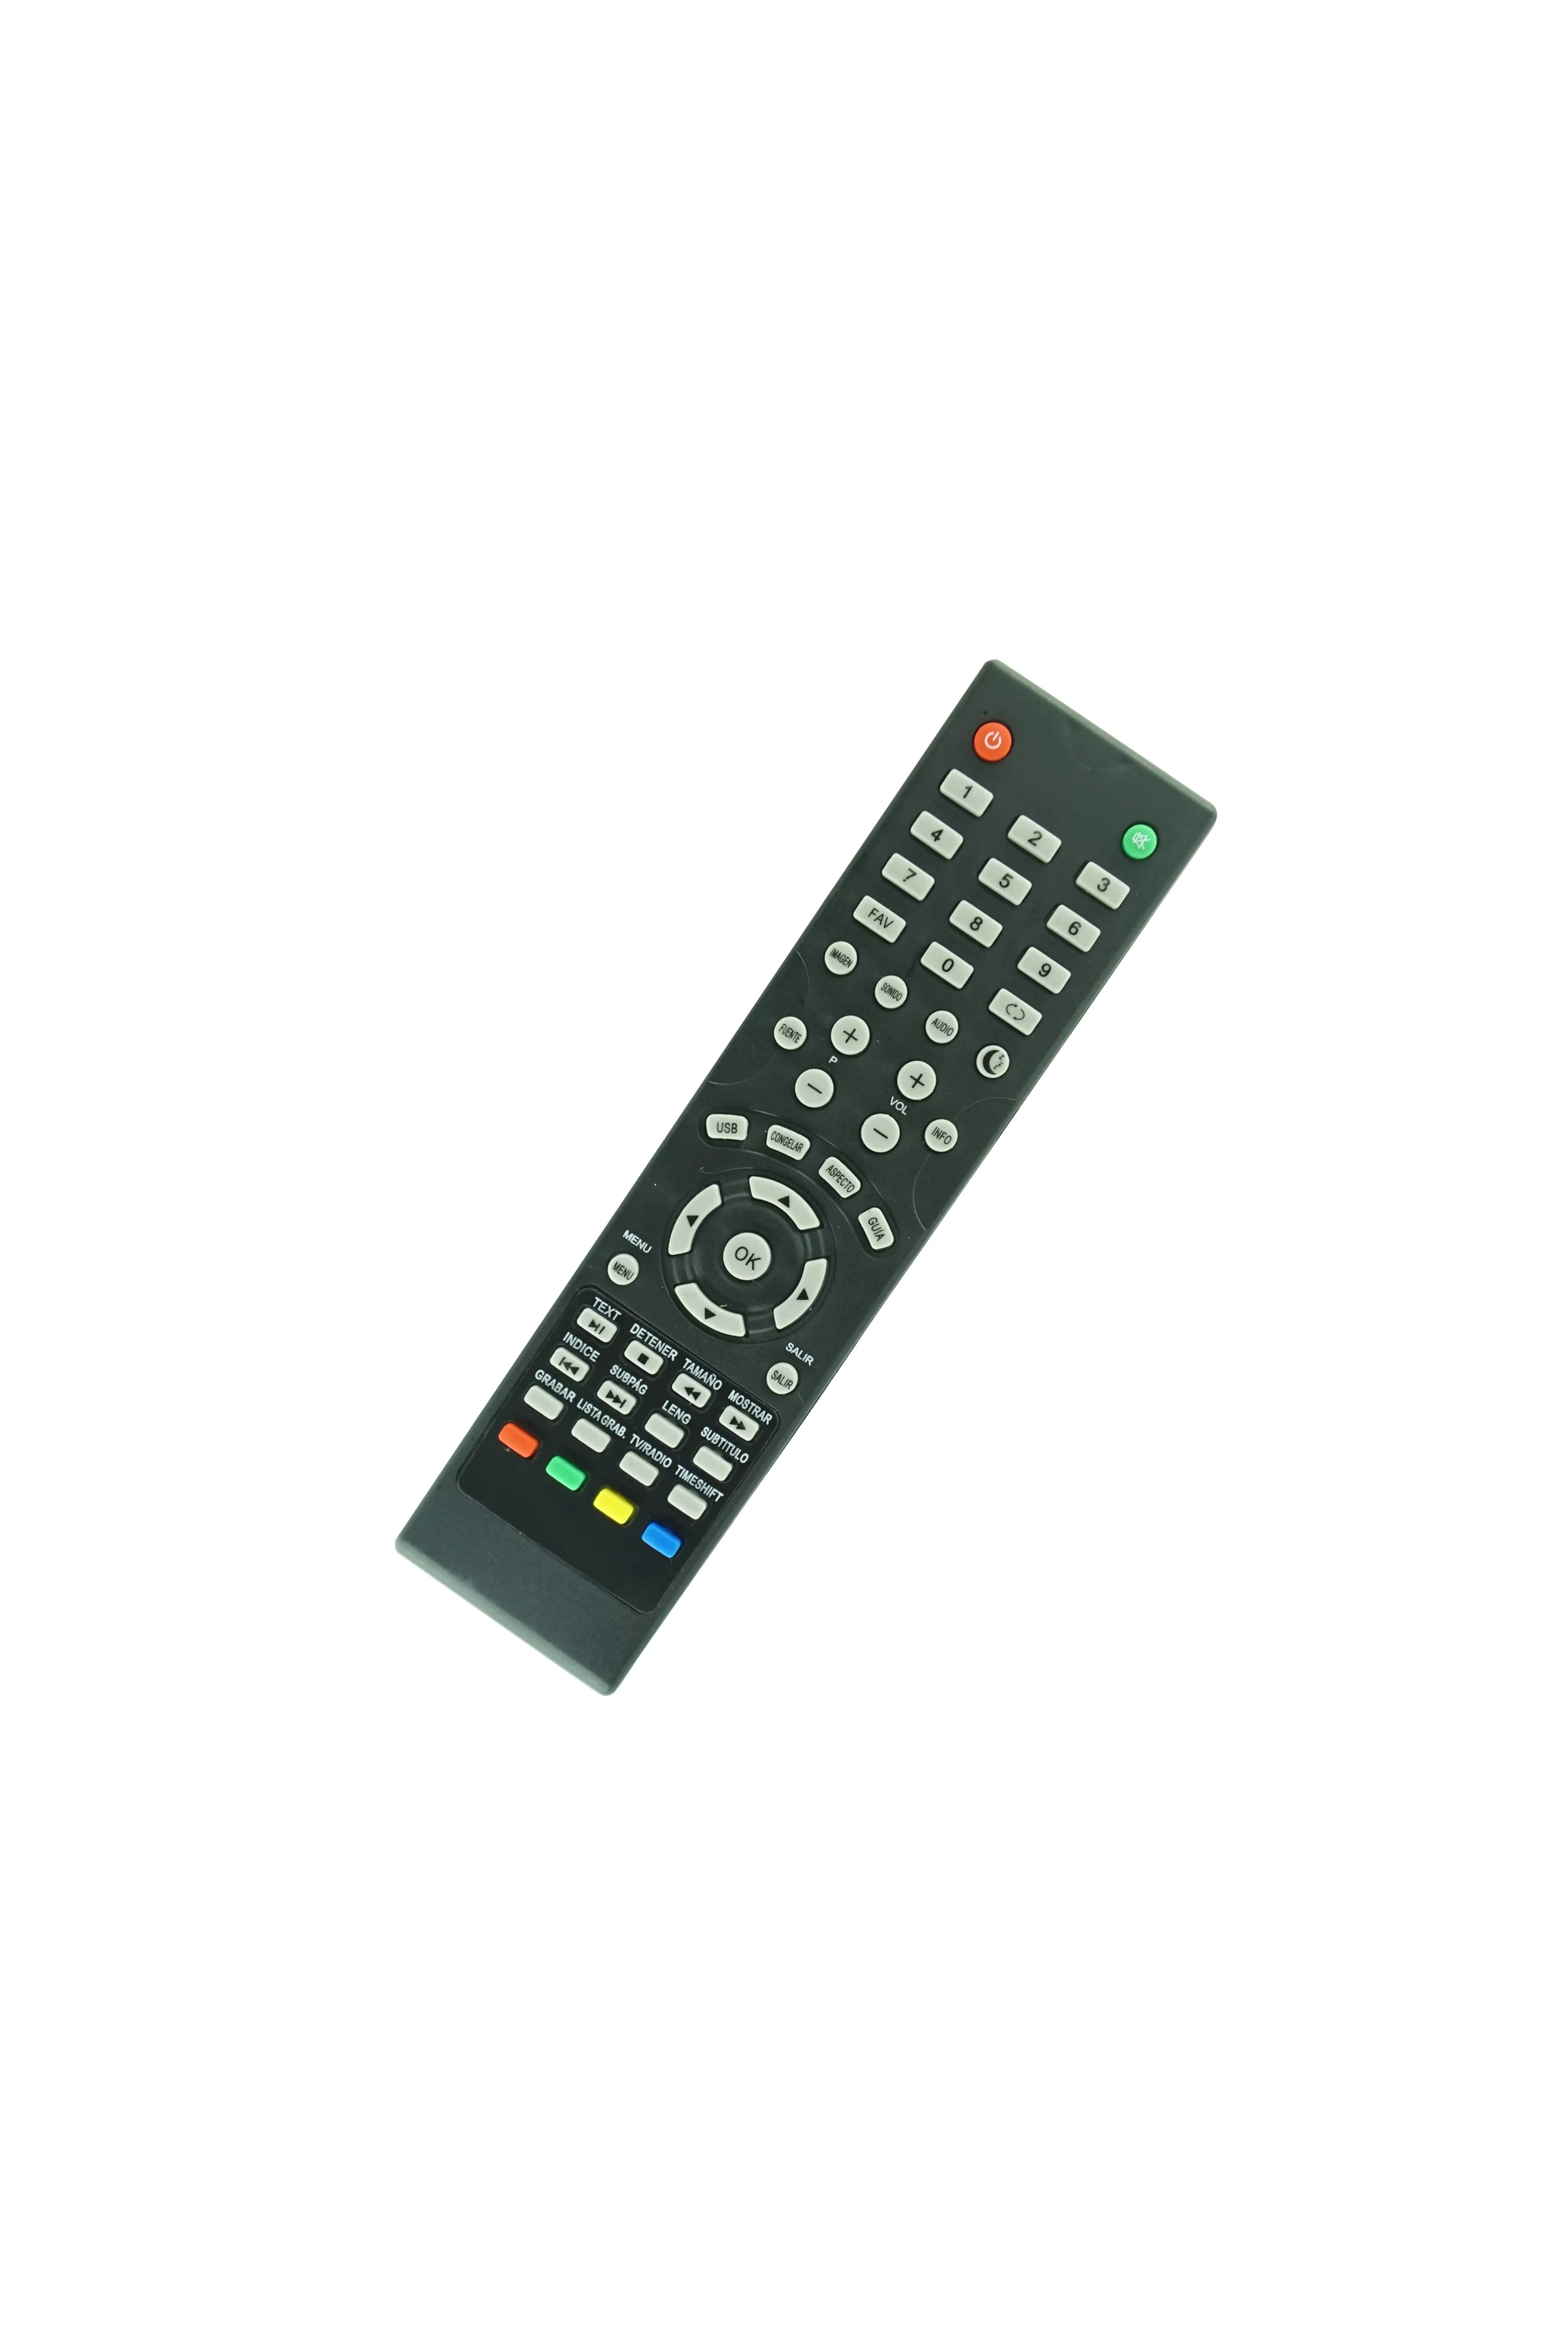 Controladores remotos para zephir zVS49UHD ZHS58UHD ZV24FHD ZV32HDS2 ZV540FHD ZVS32HD ZVS40FHD ZVS43UHD ZVS50UHD SMART LCD LED HDTV TV TV